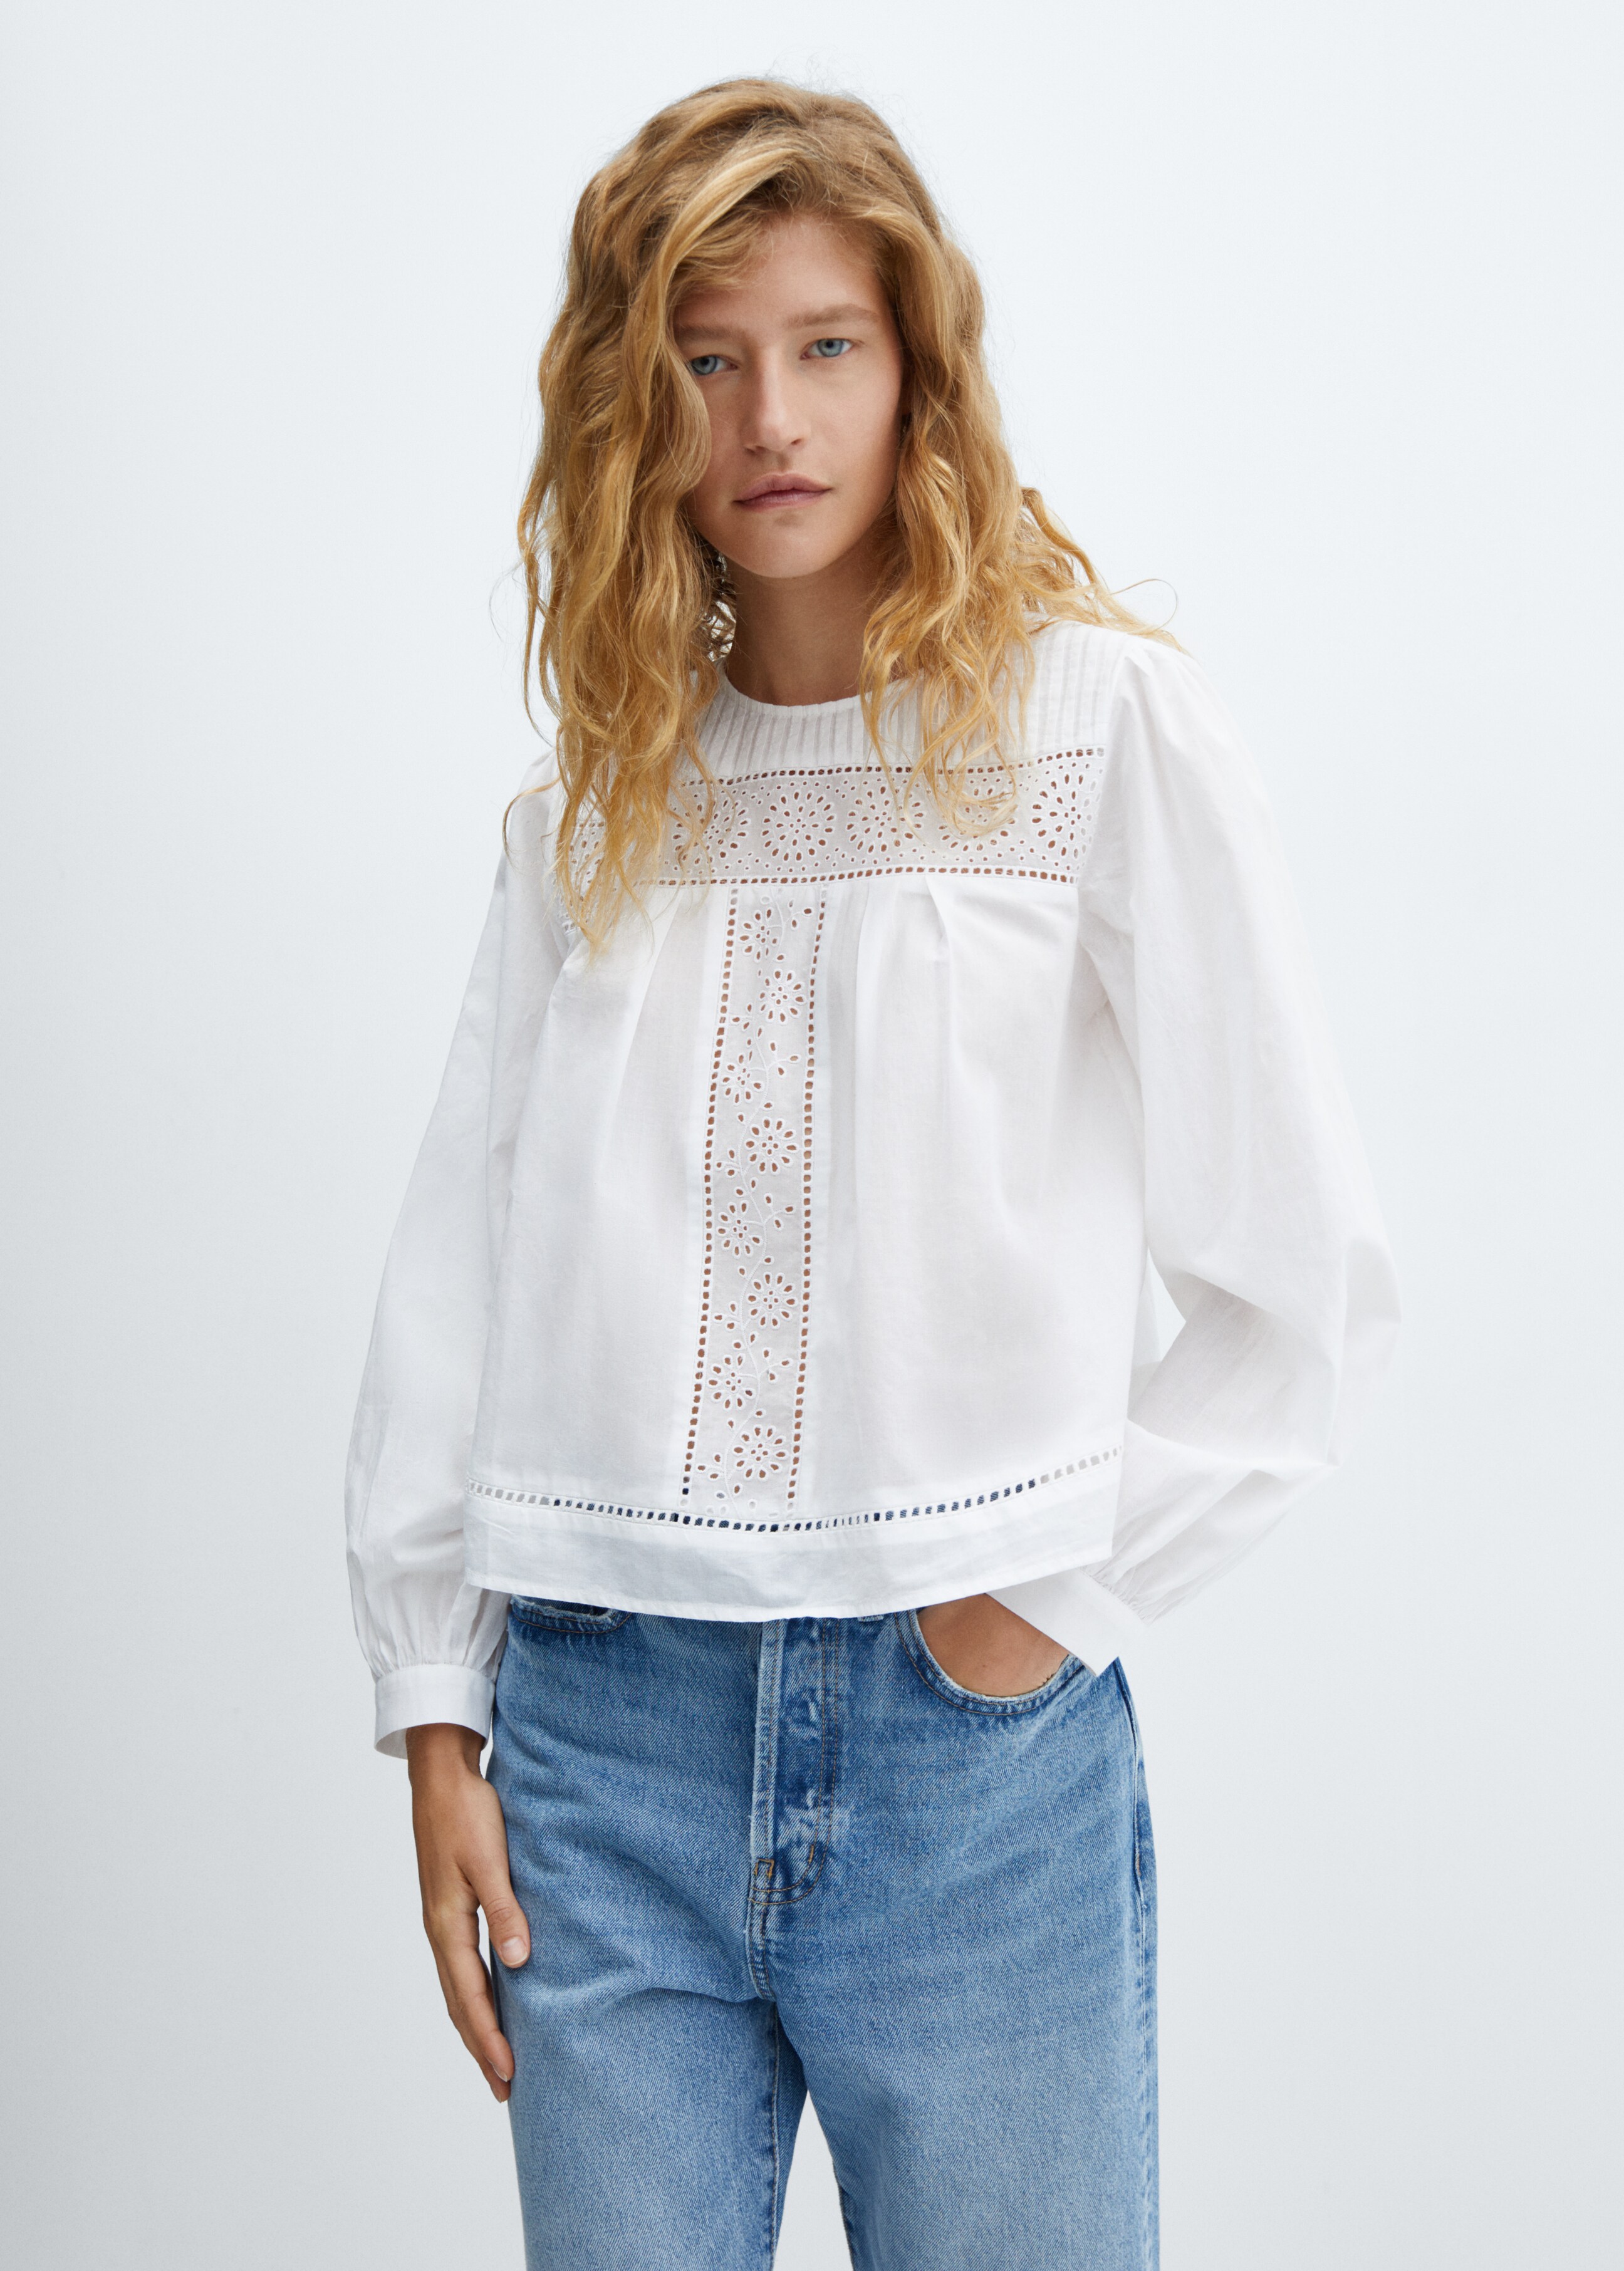 Cotton blouse with openwork details  - Medium plane